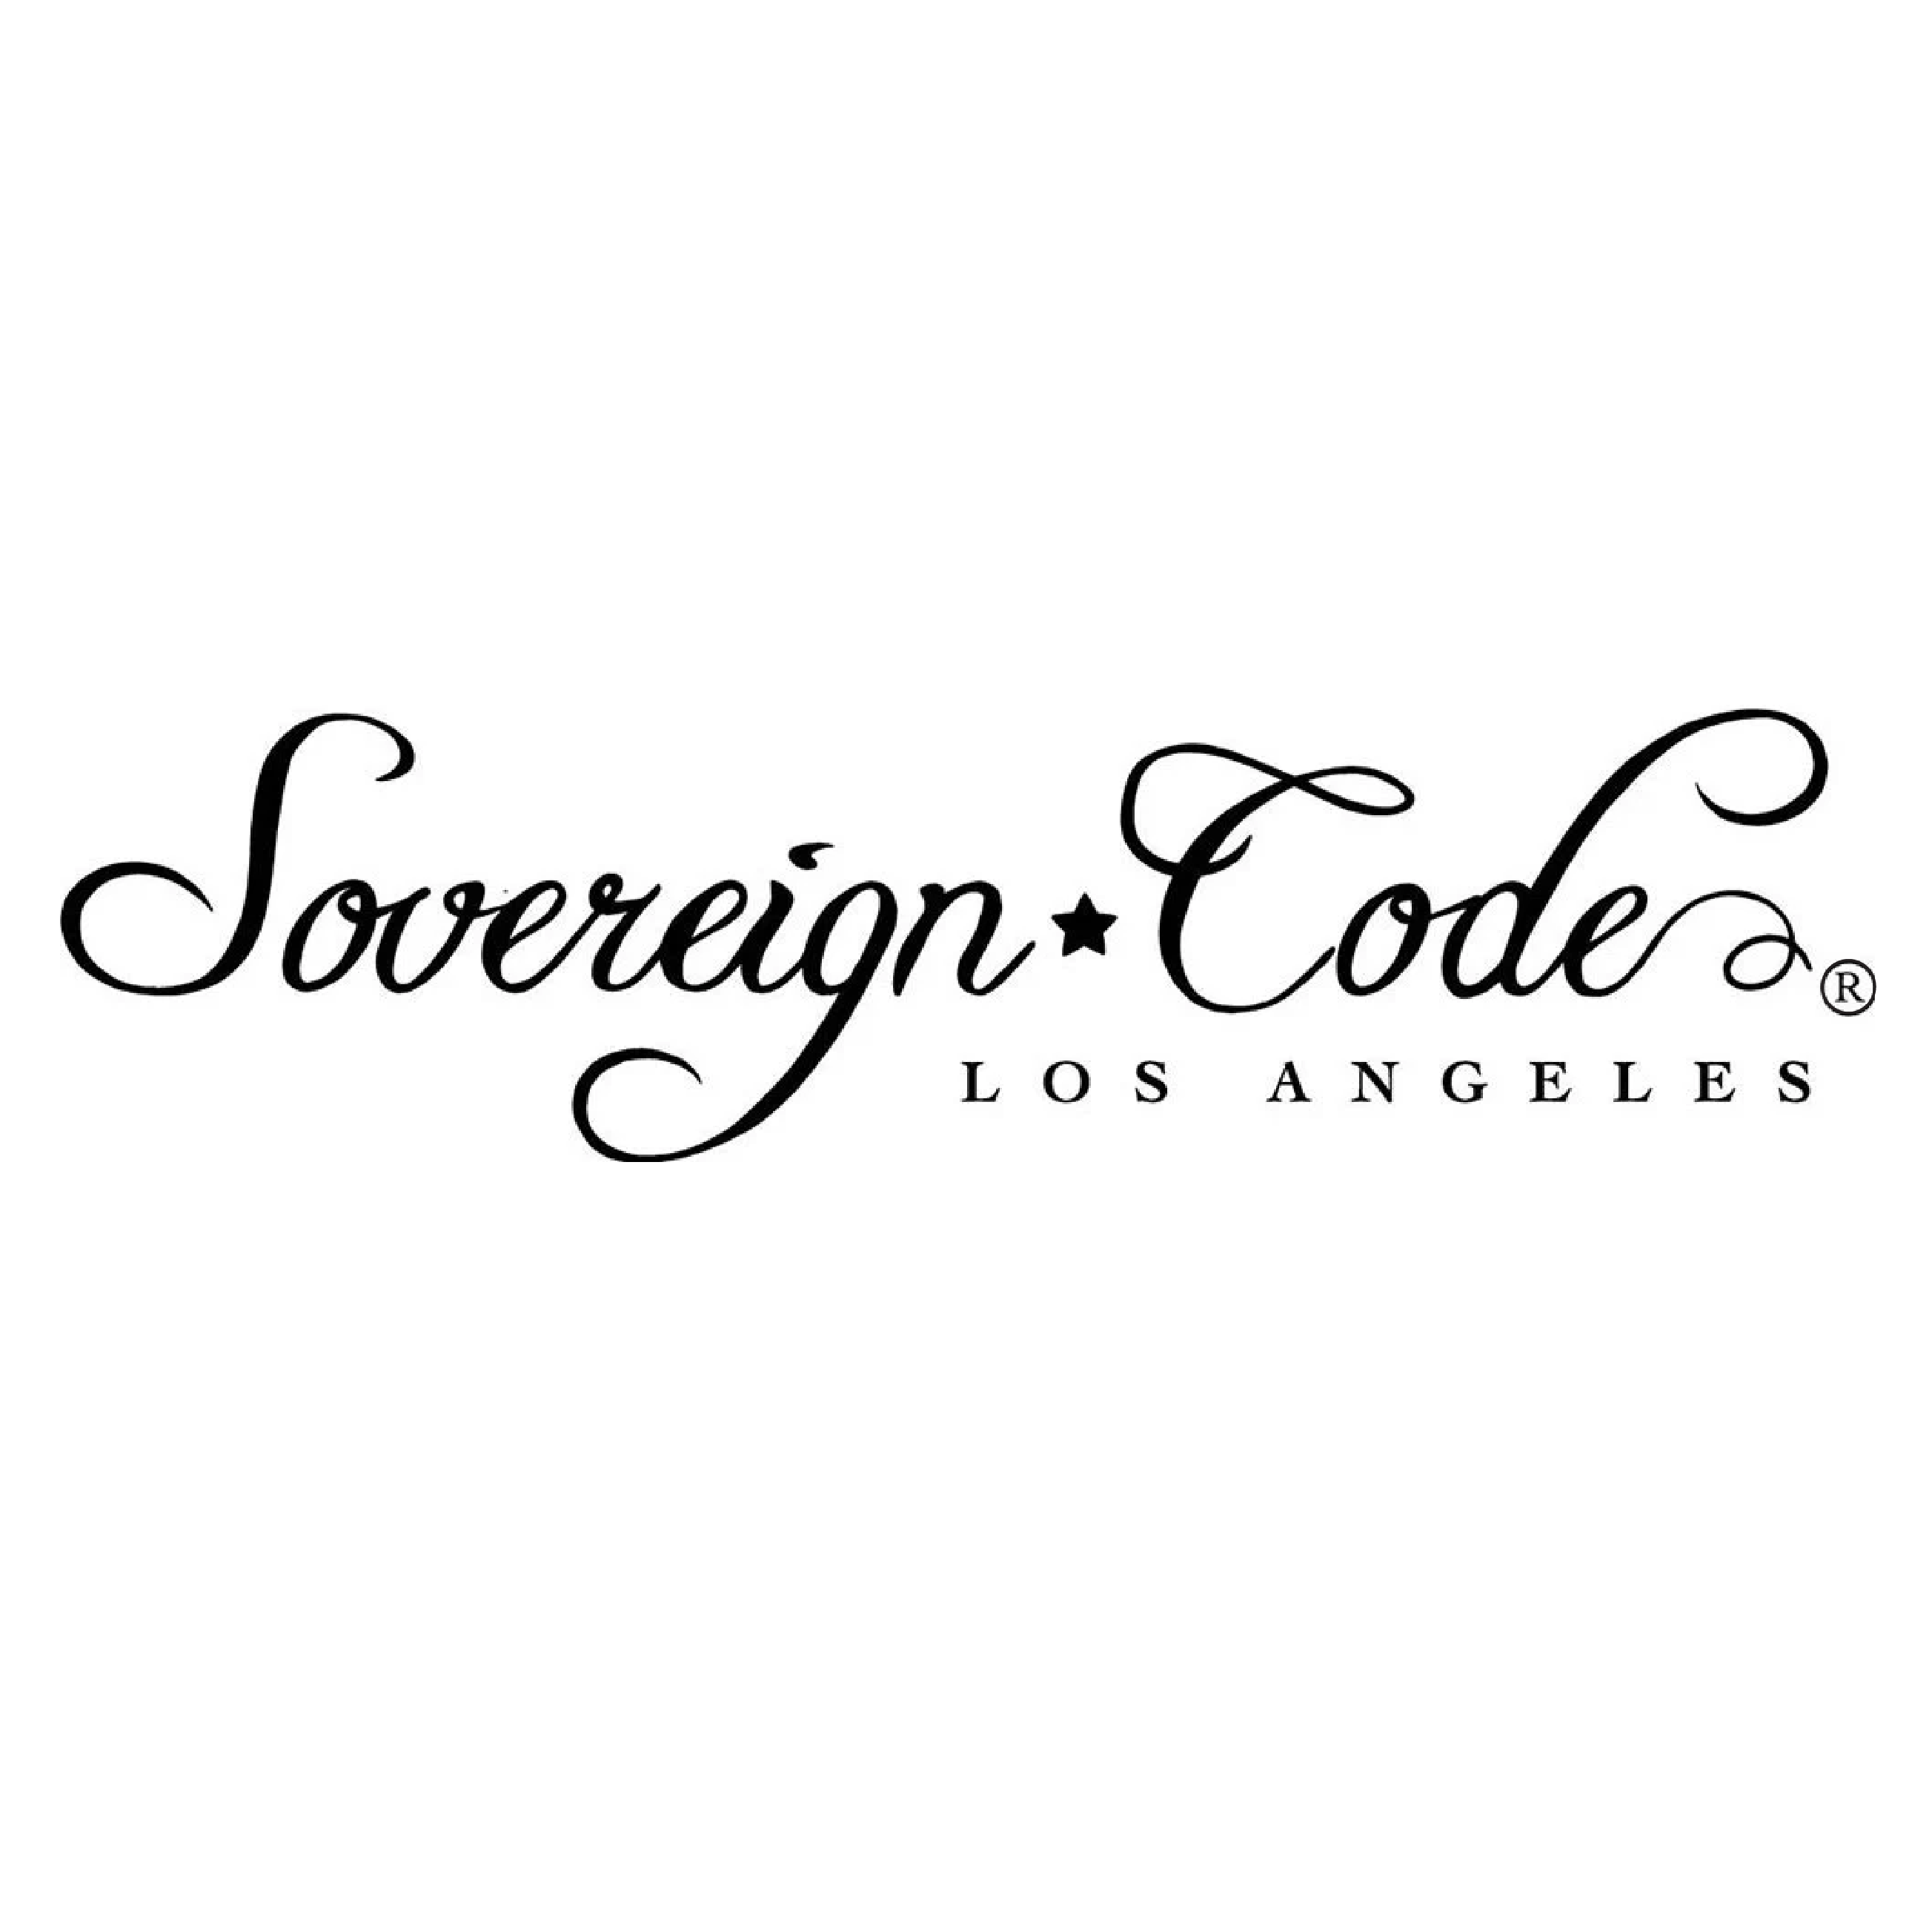 Sovereign-Code-Garment-Manufacturer